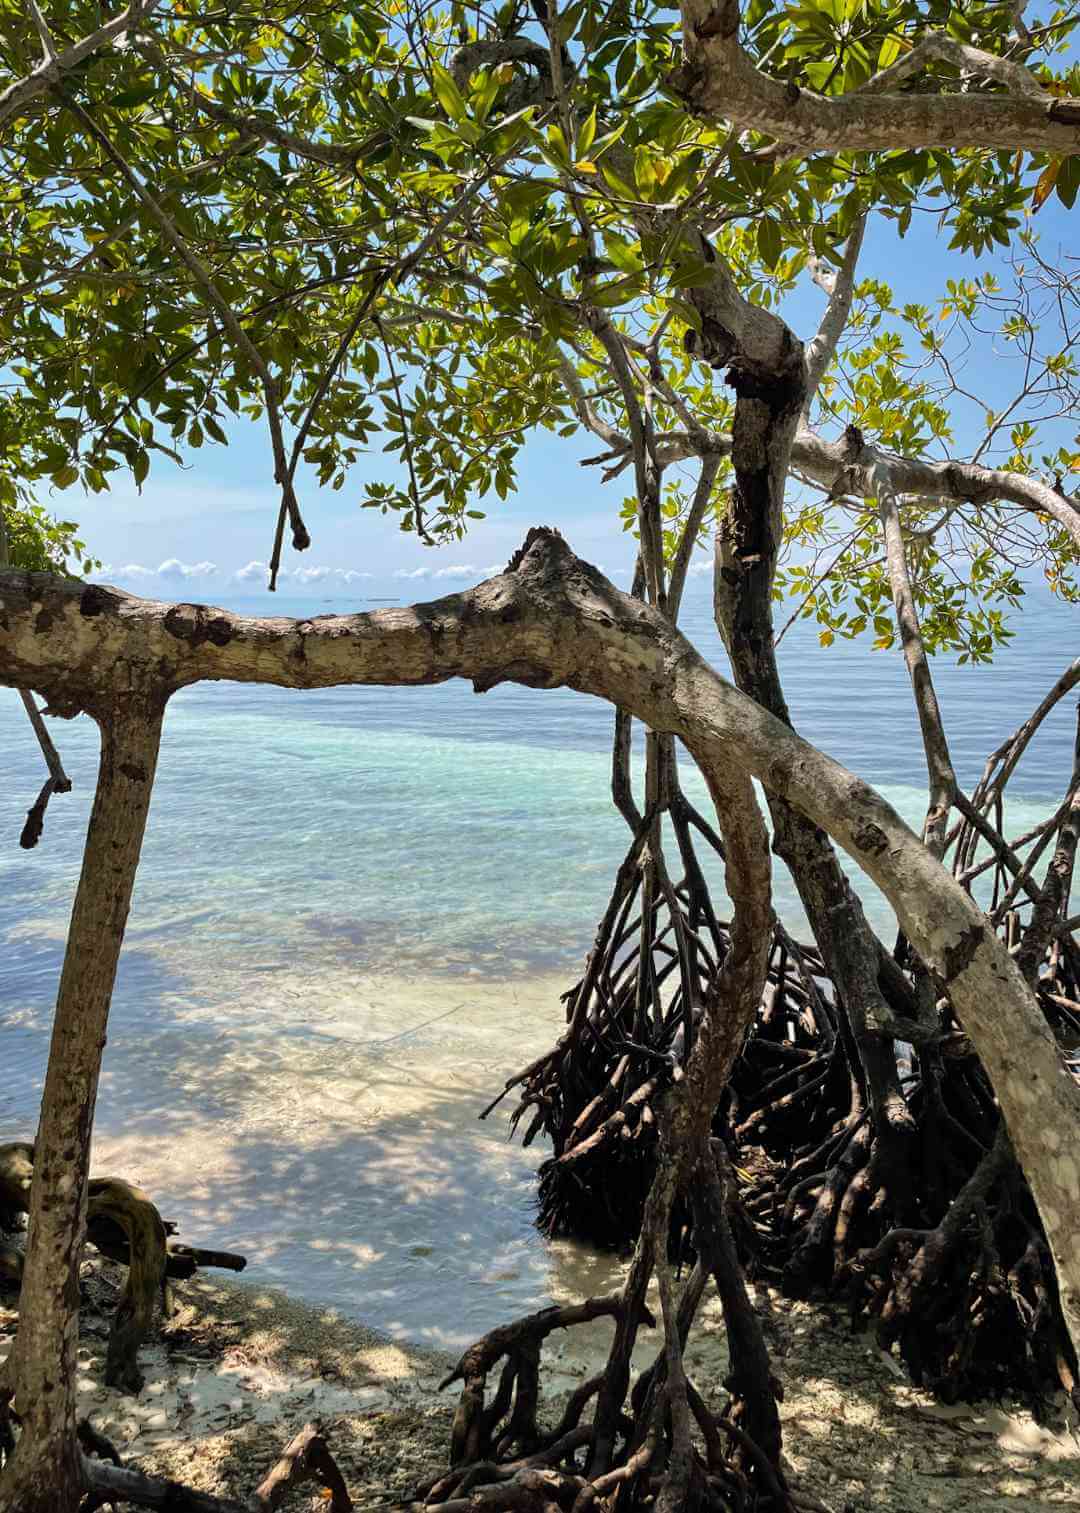 Bosques de mangle en las Islas de San Bernardo